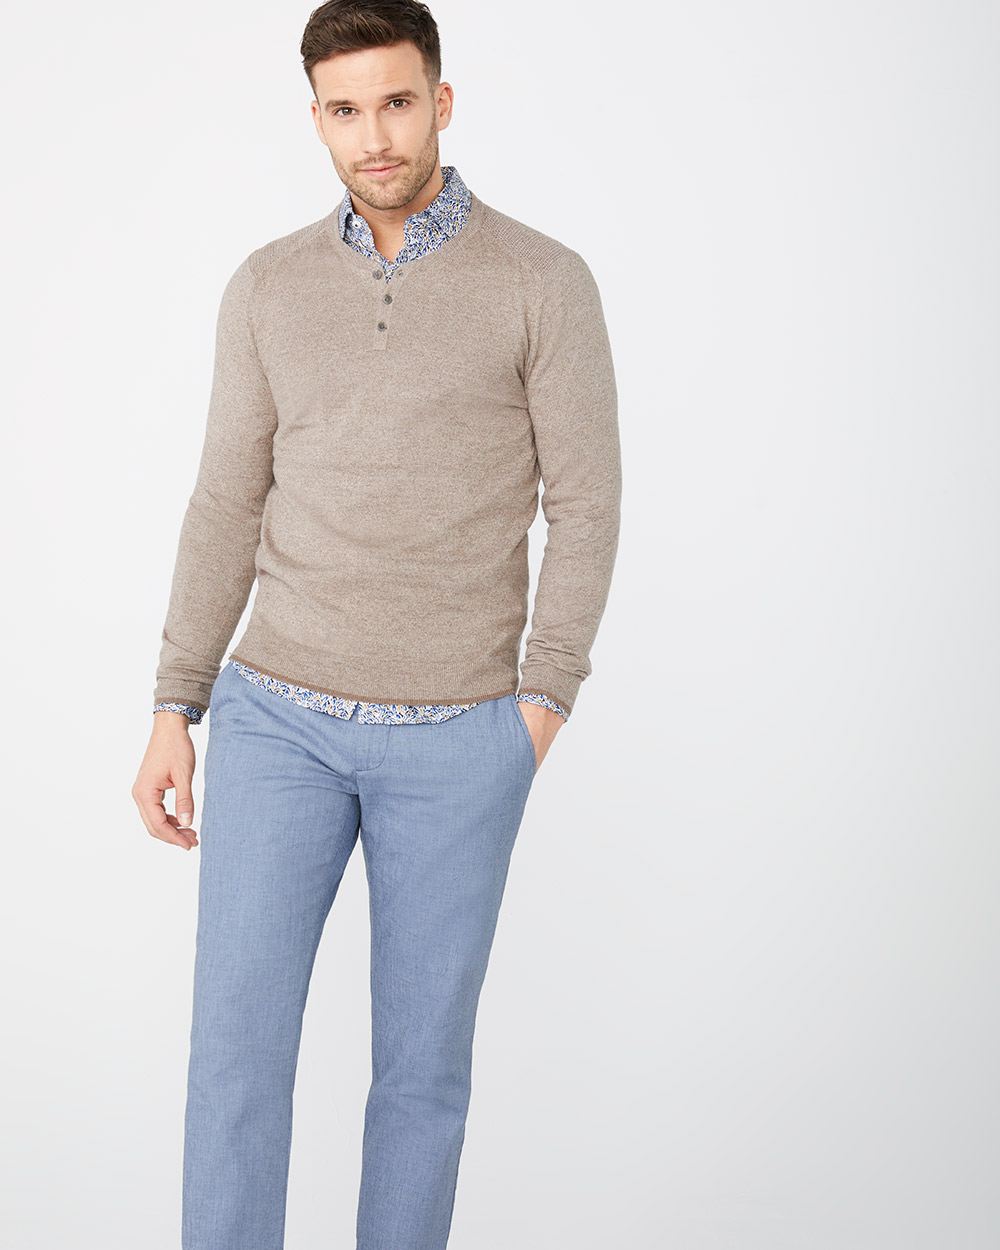 Henley sweater | RW&CO.